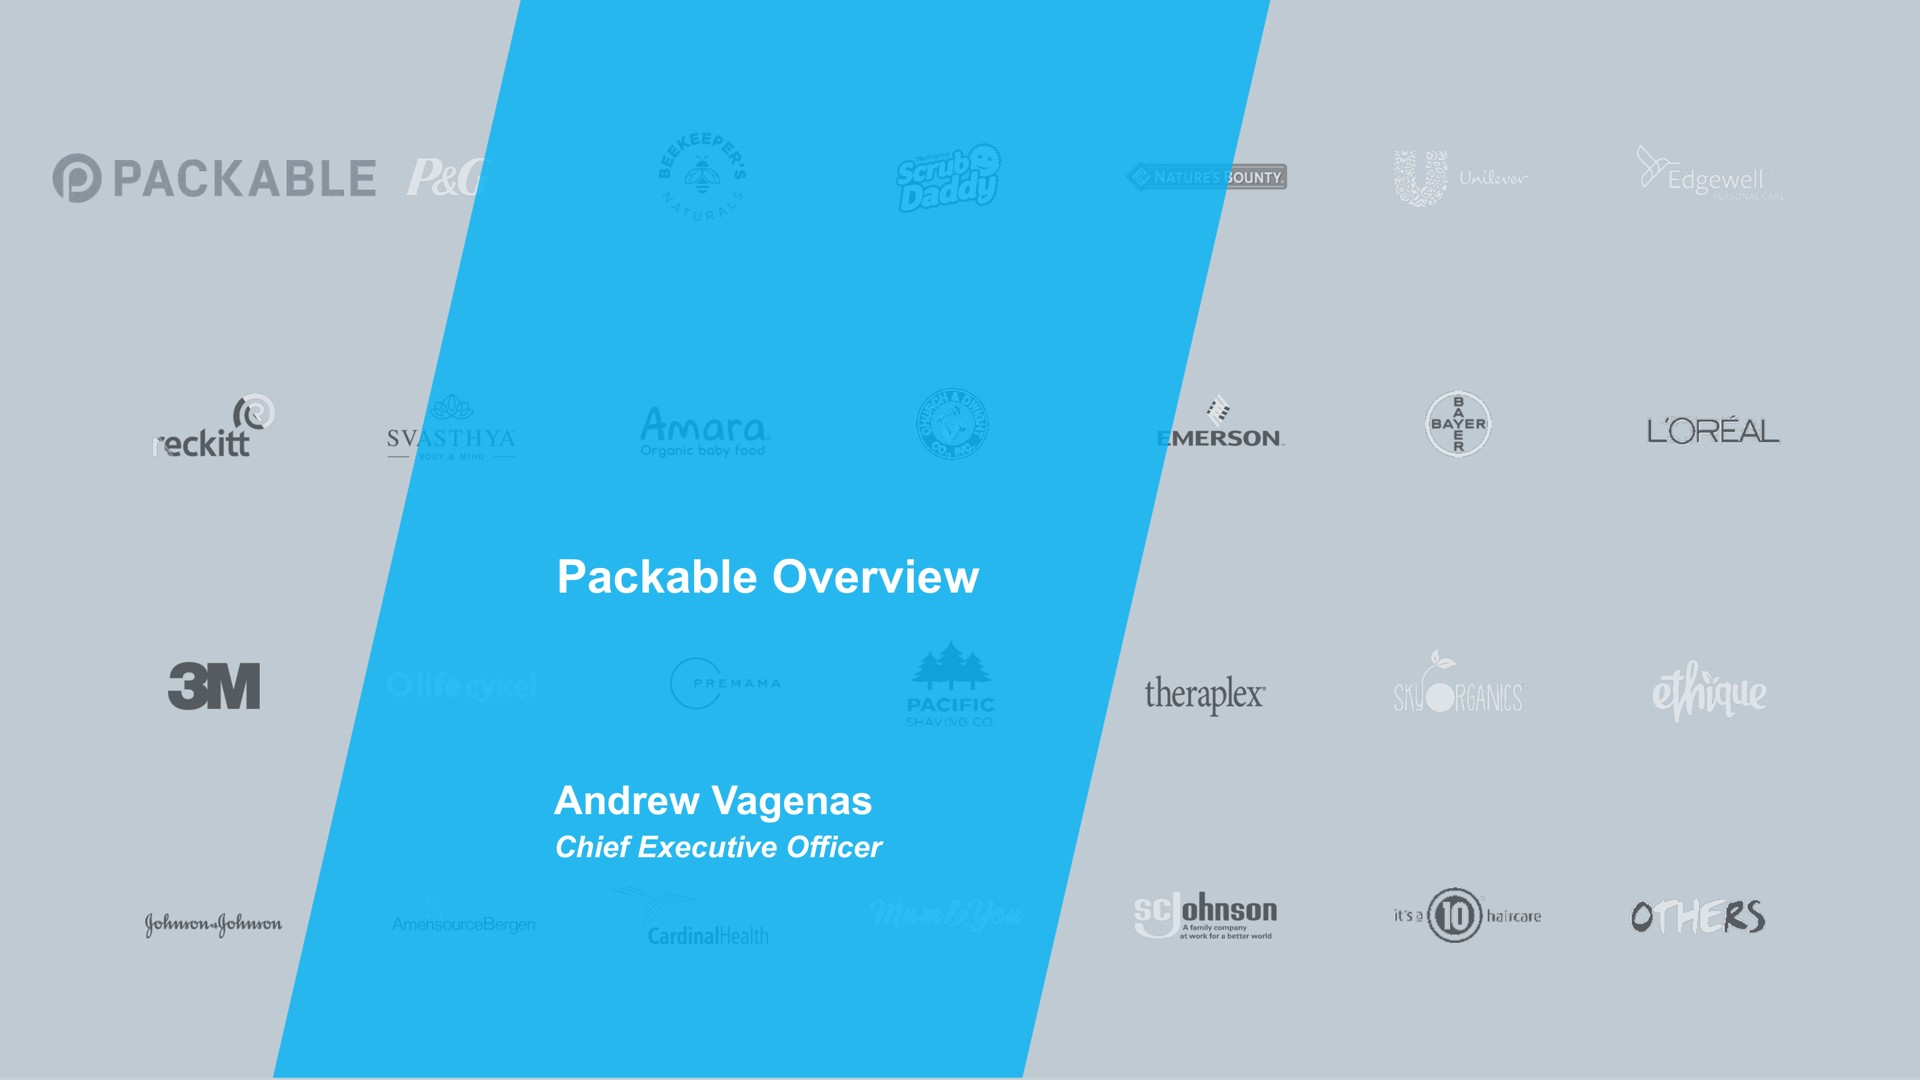 packable overview gan | Packable